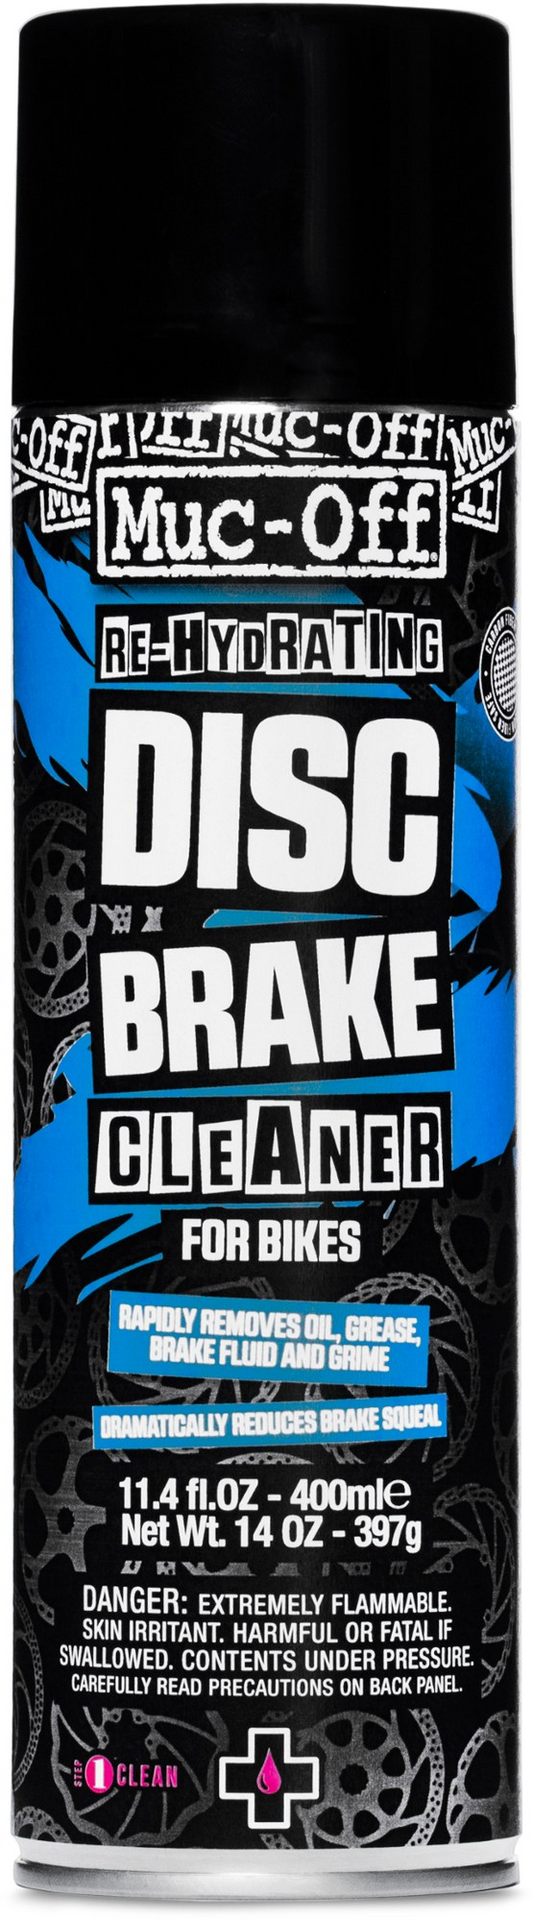 Muc-Off - Disc Brake Cleaner for bikes.